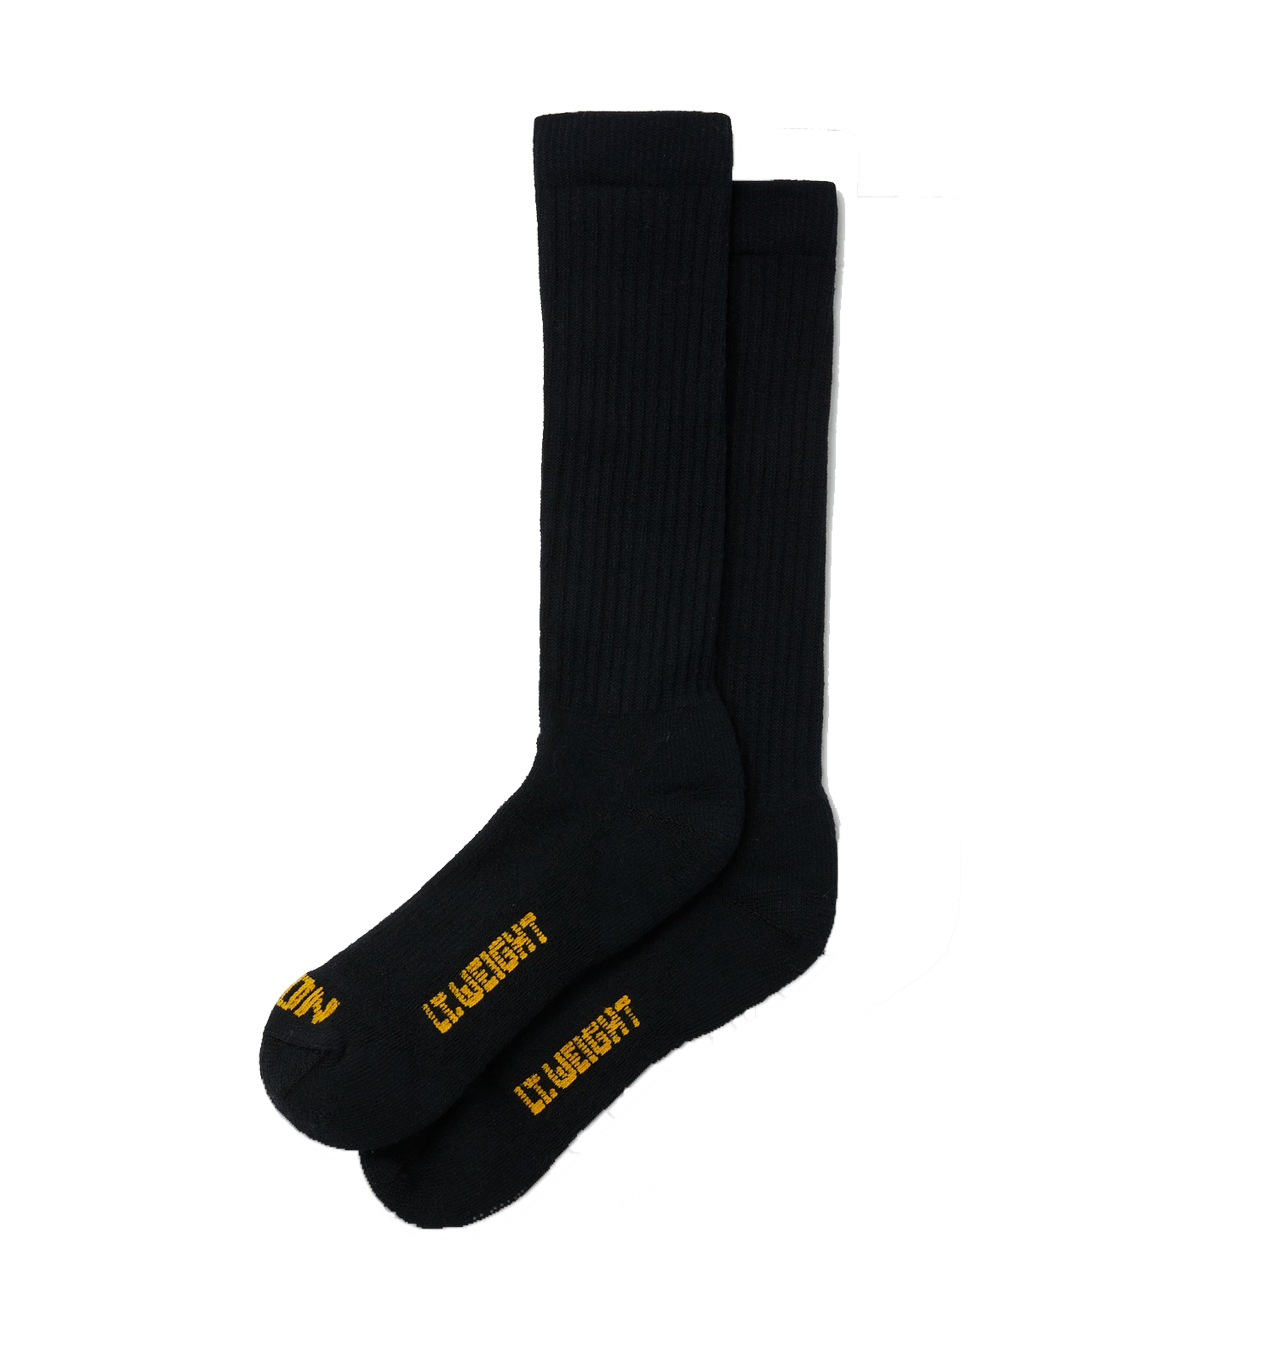 Filson - Lightweight Traditional Crew Socks - Black